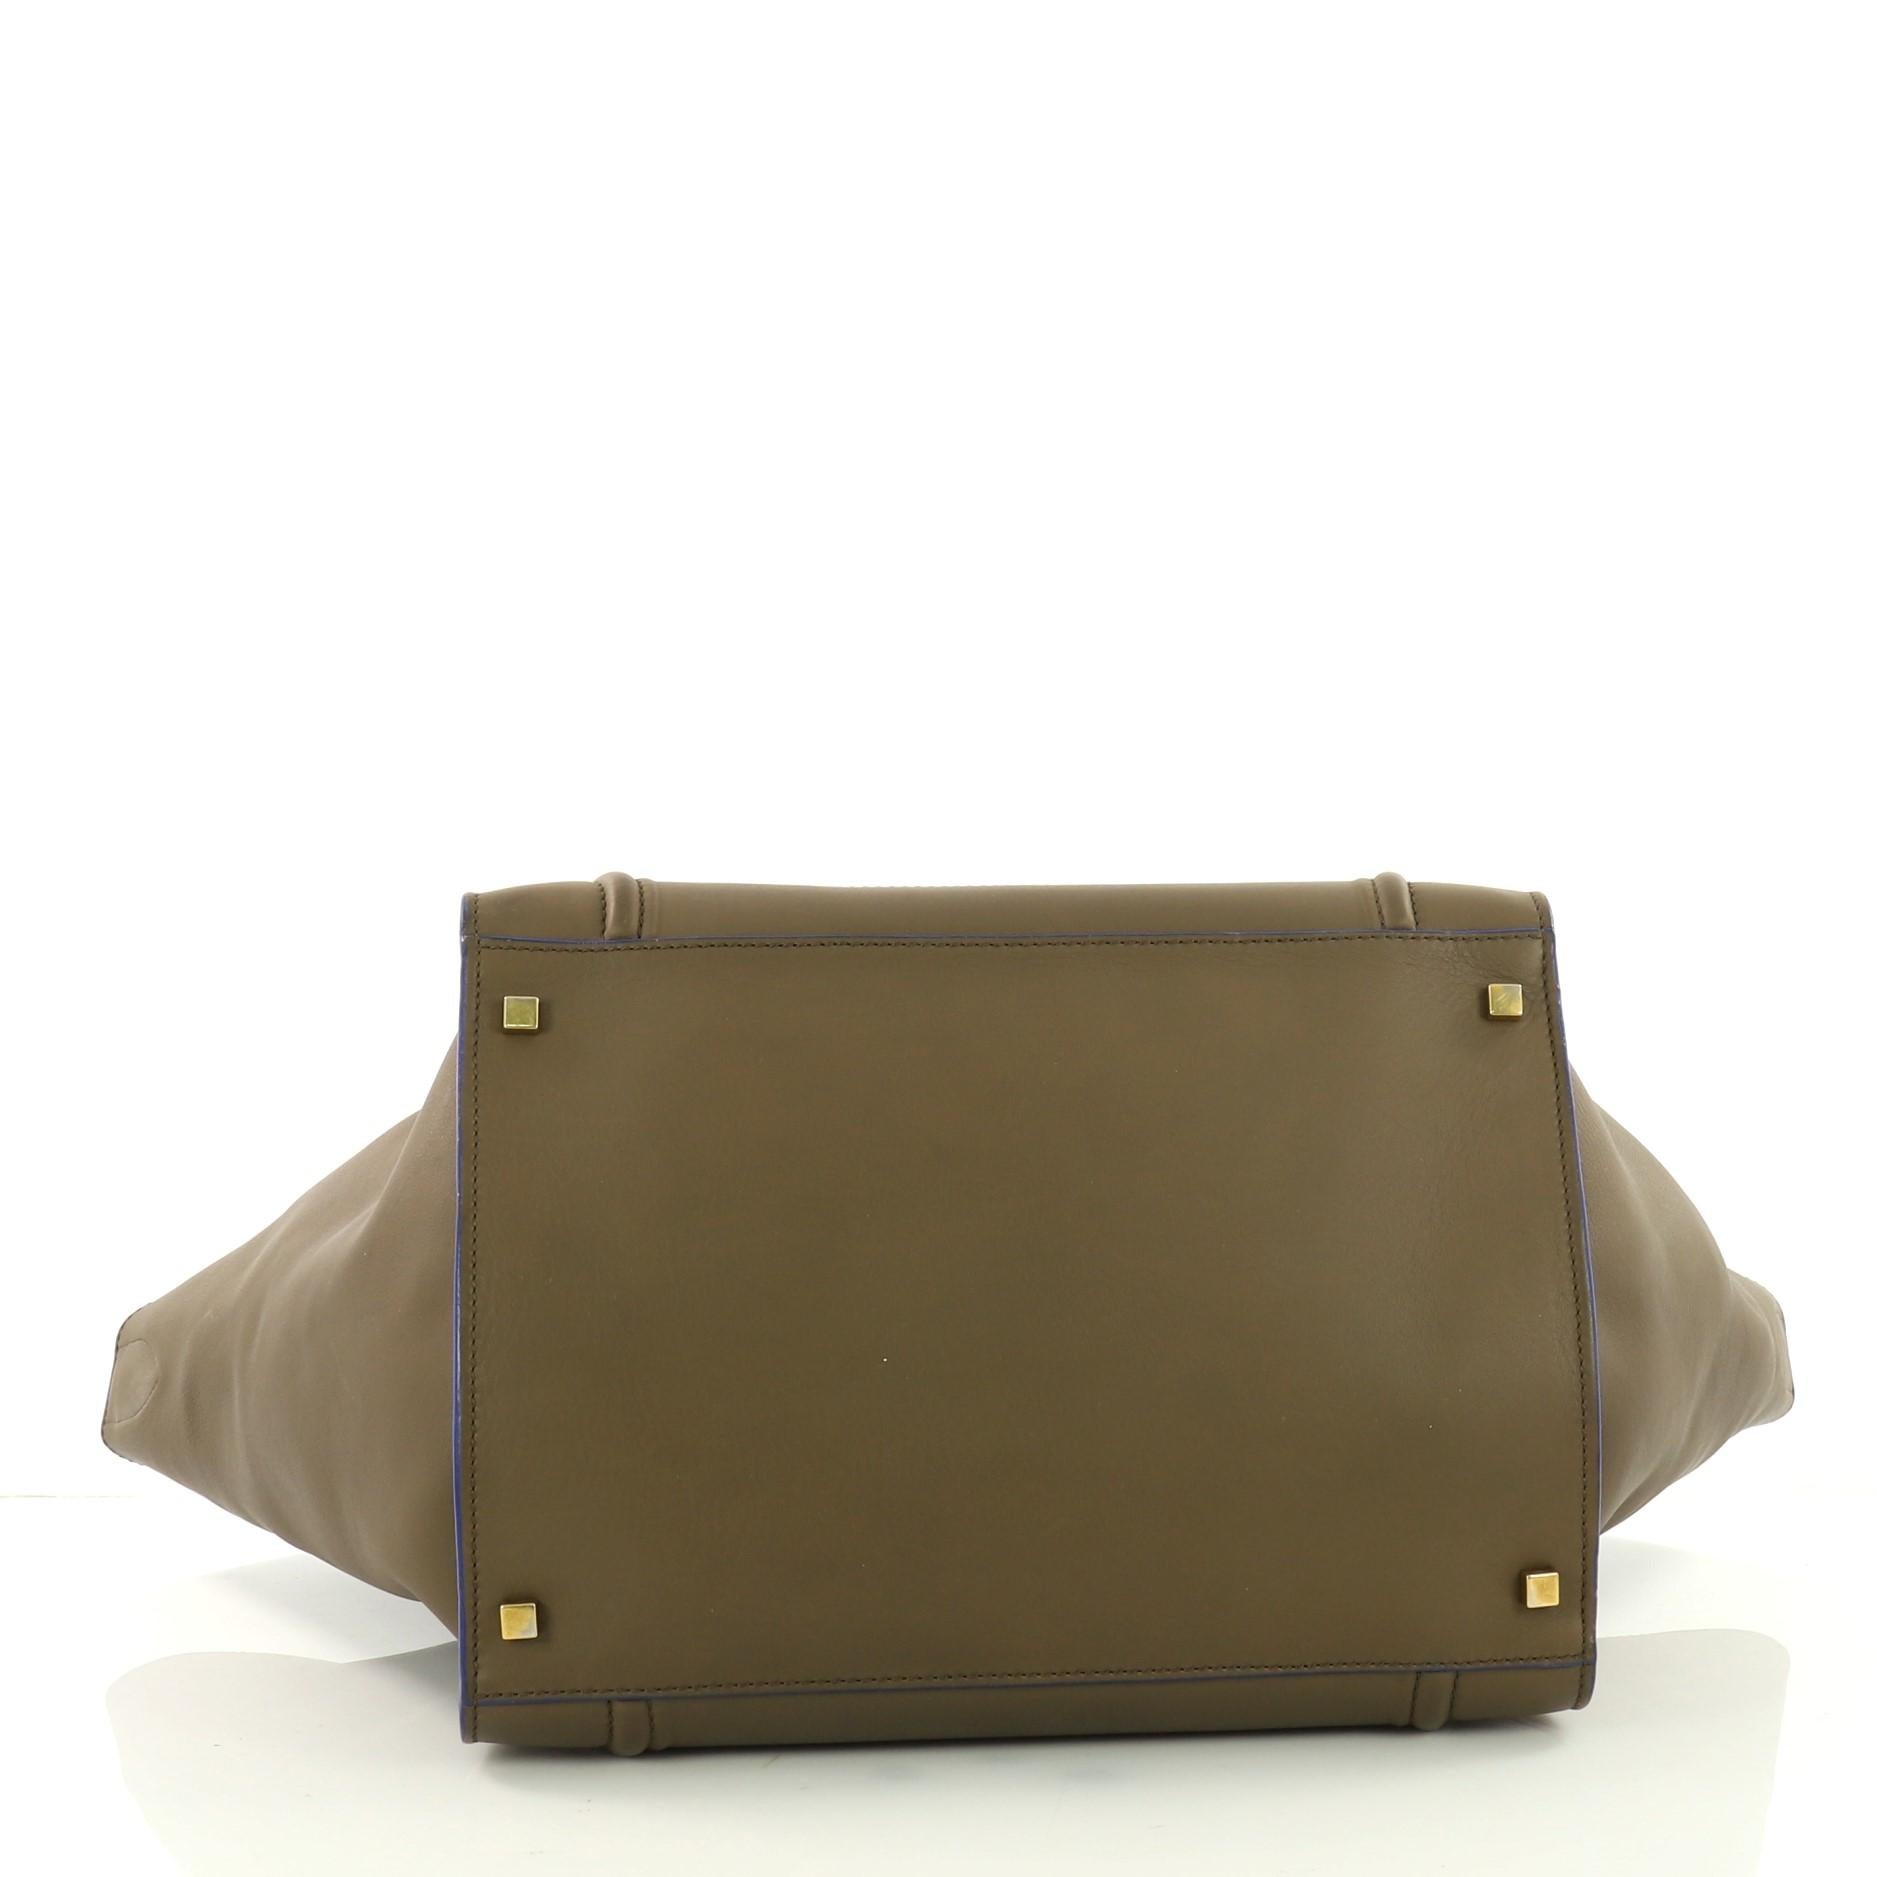  Celine Phantom Handbag Smooth Leather Large 1